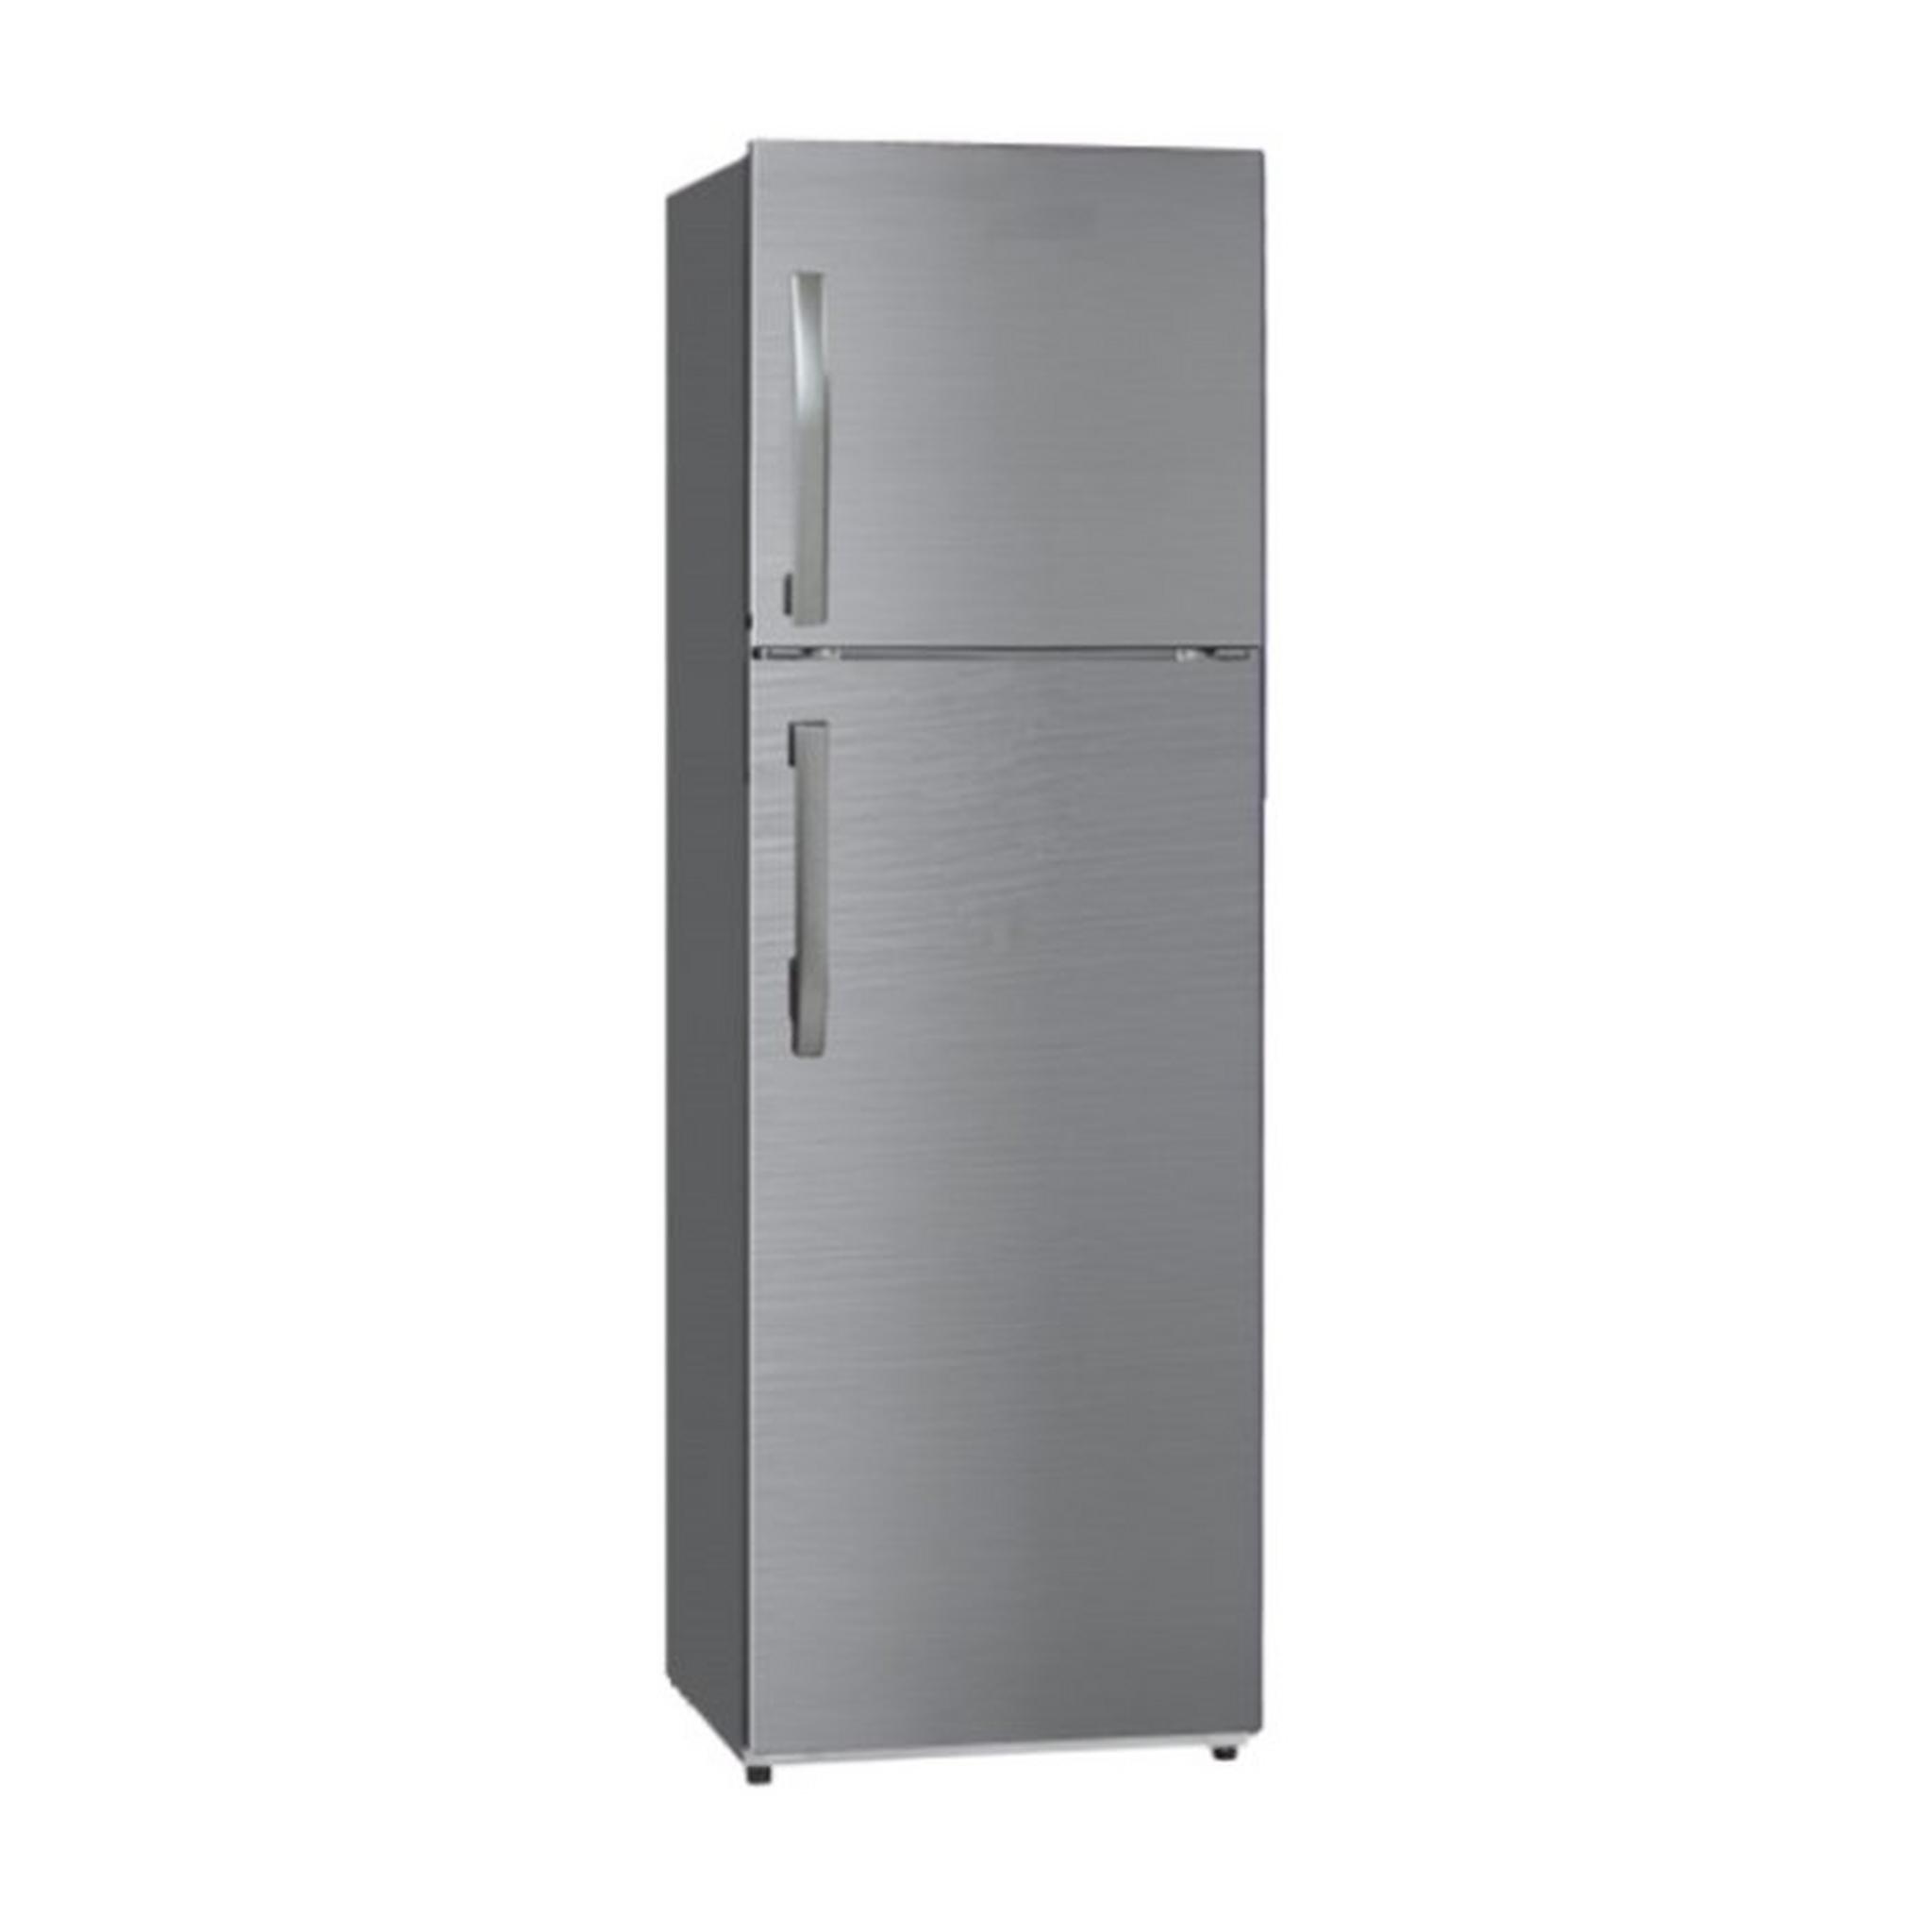 Wansa 16 Cubic Feet Top Freezer Refrigerator - Inox (WRTW-448-NFIC82)